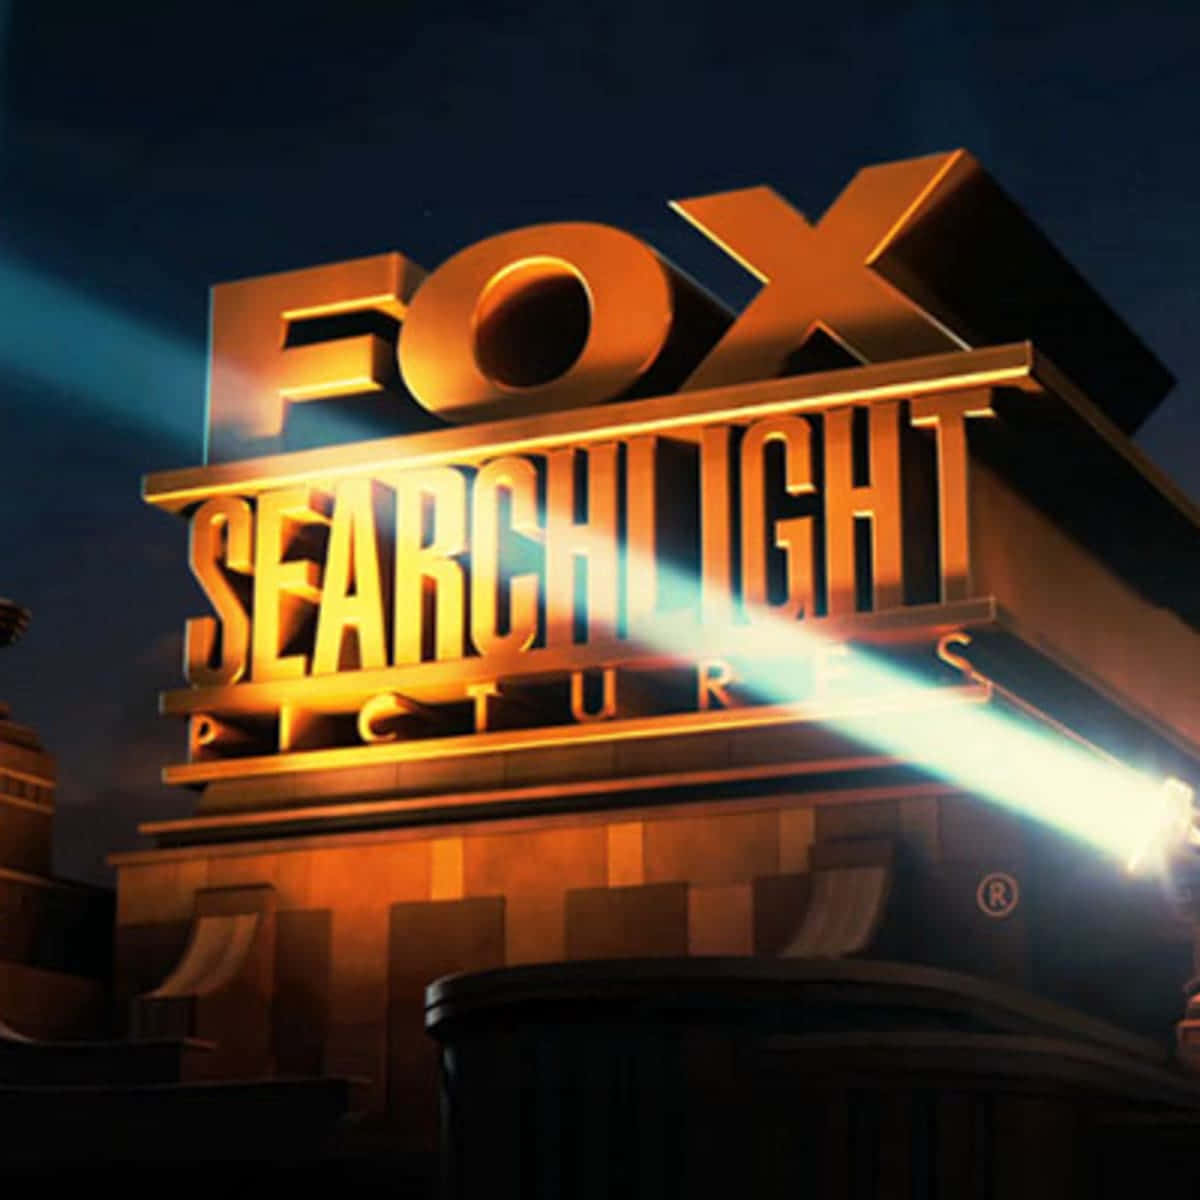 Foxsearchlight Stillbild